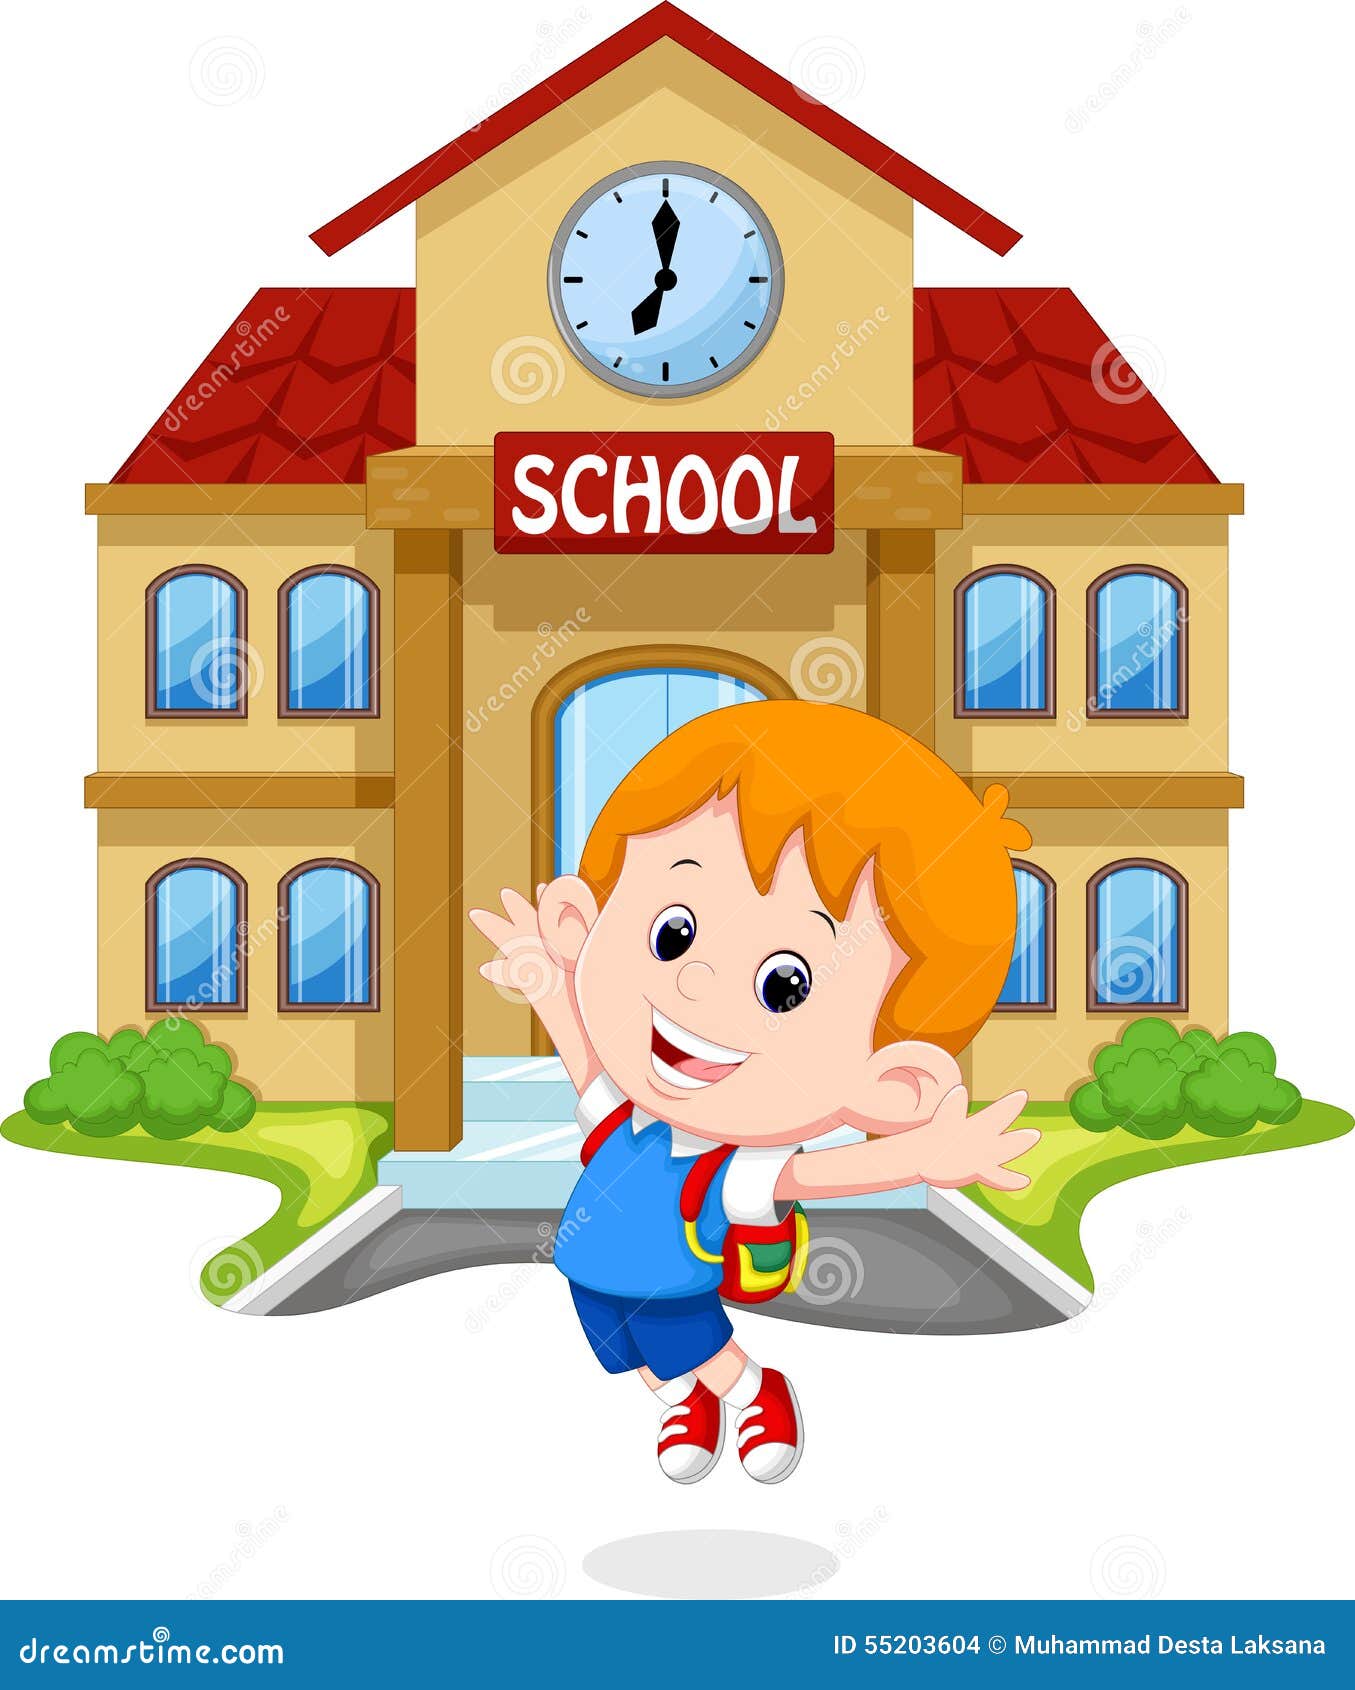 He will go to school. Go to School картинка. Мальчик идет после школы. Вернуться в школу. Возвращаться из школы картинка.